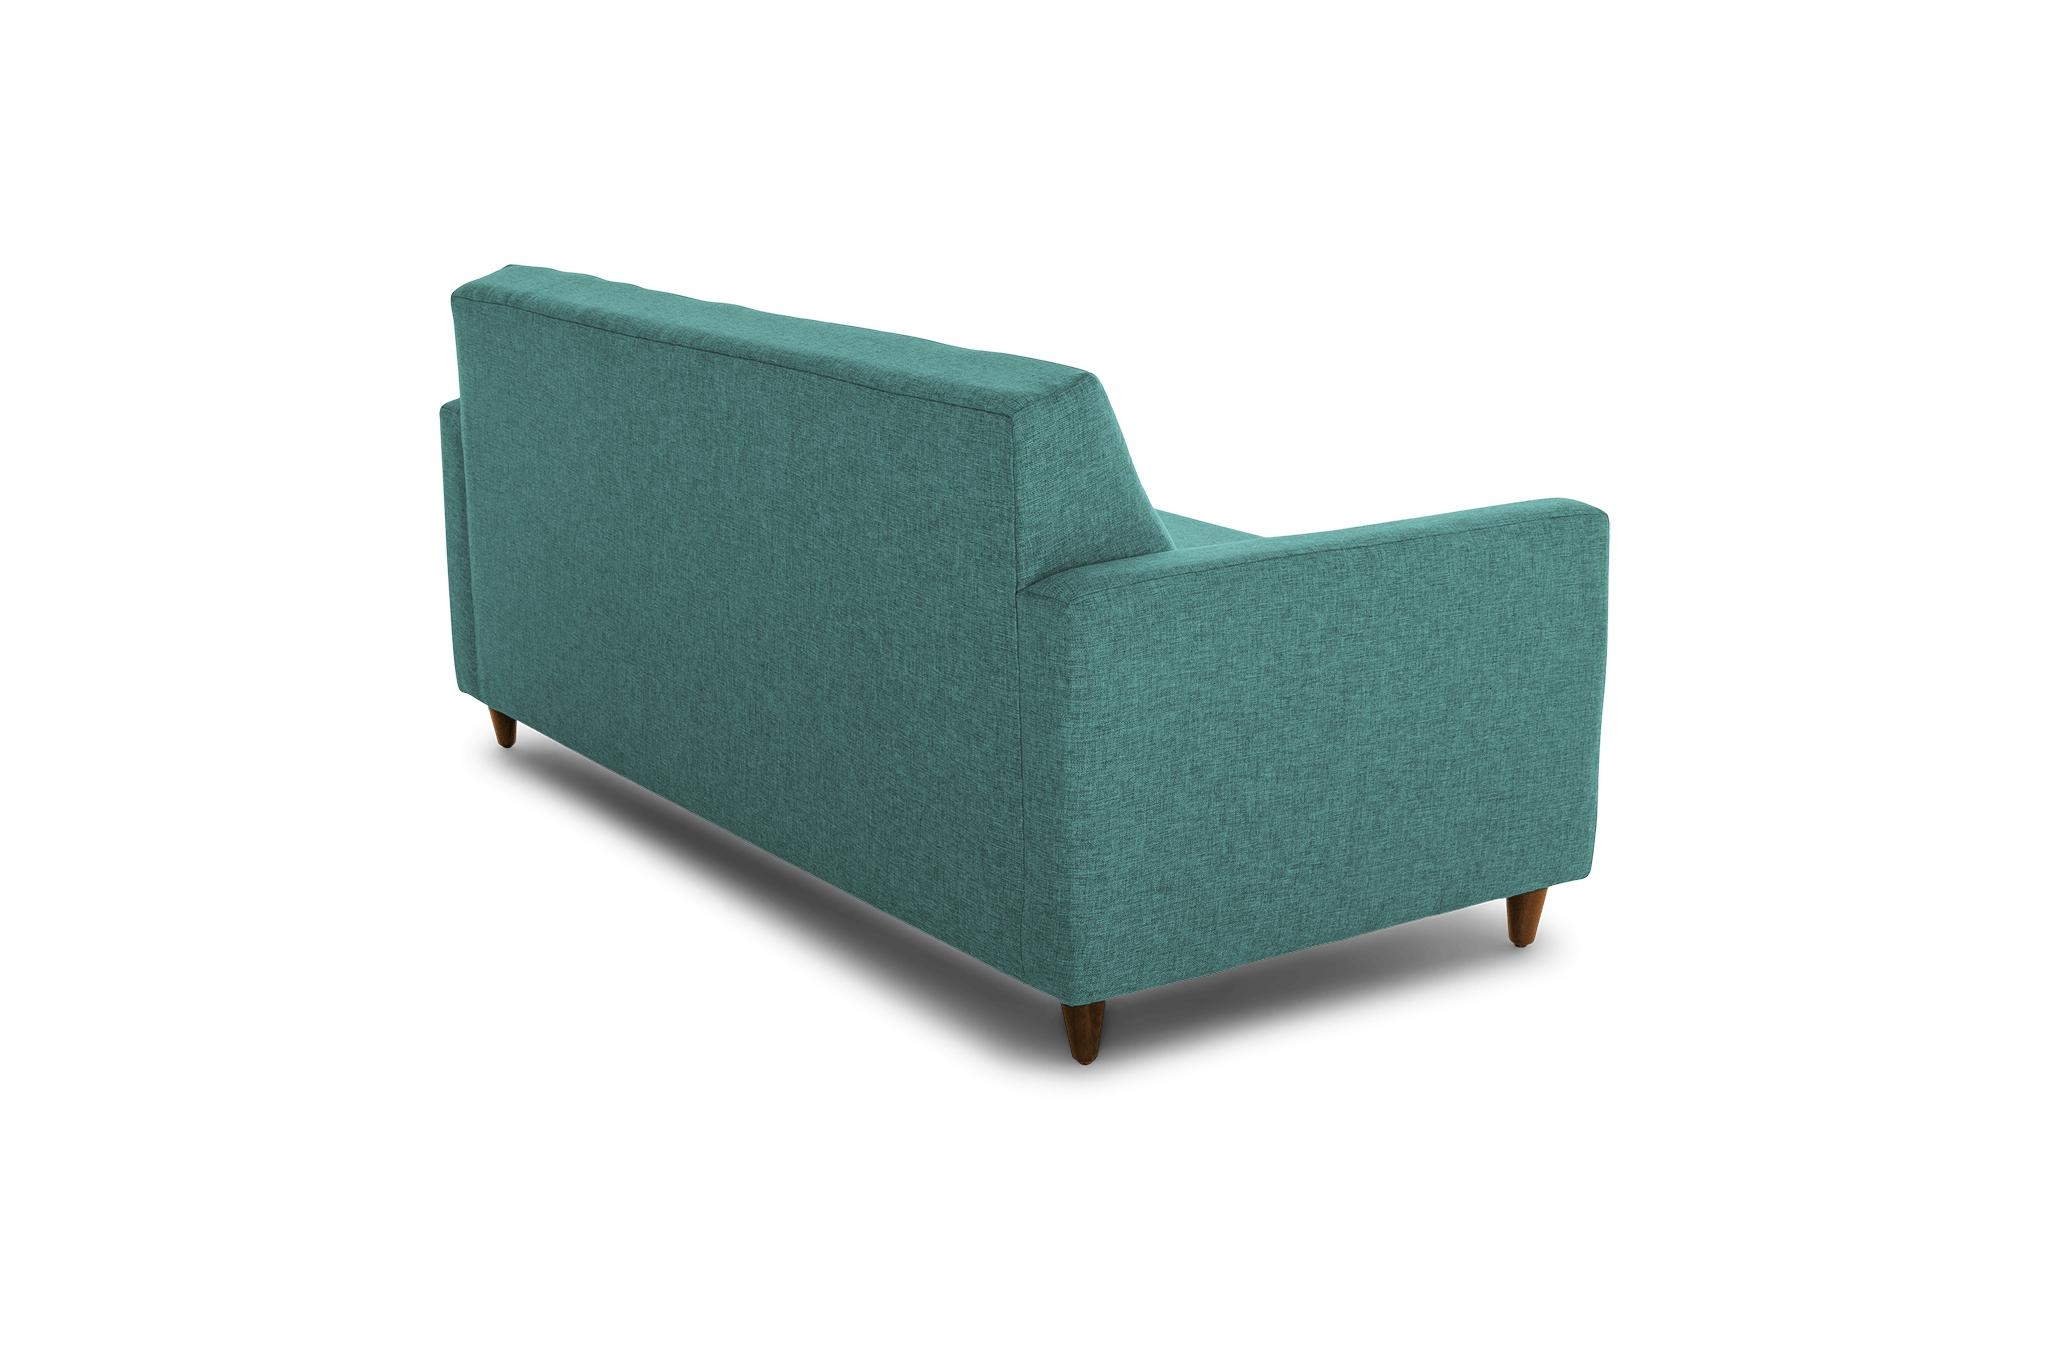 Green Korver Mid Century Modern Sleeper Sofa - Essence Aqua - Mocha - Image 4